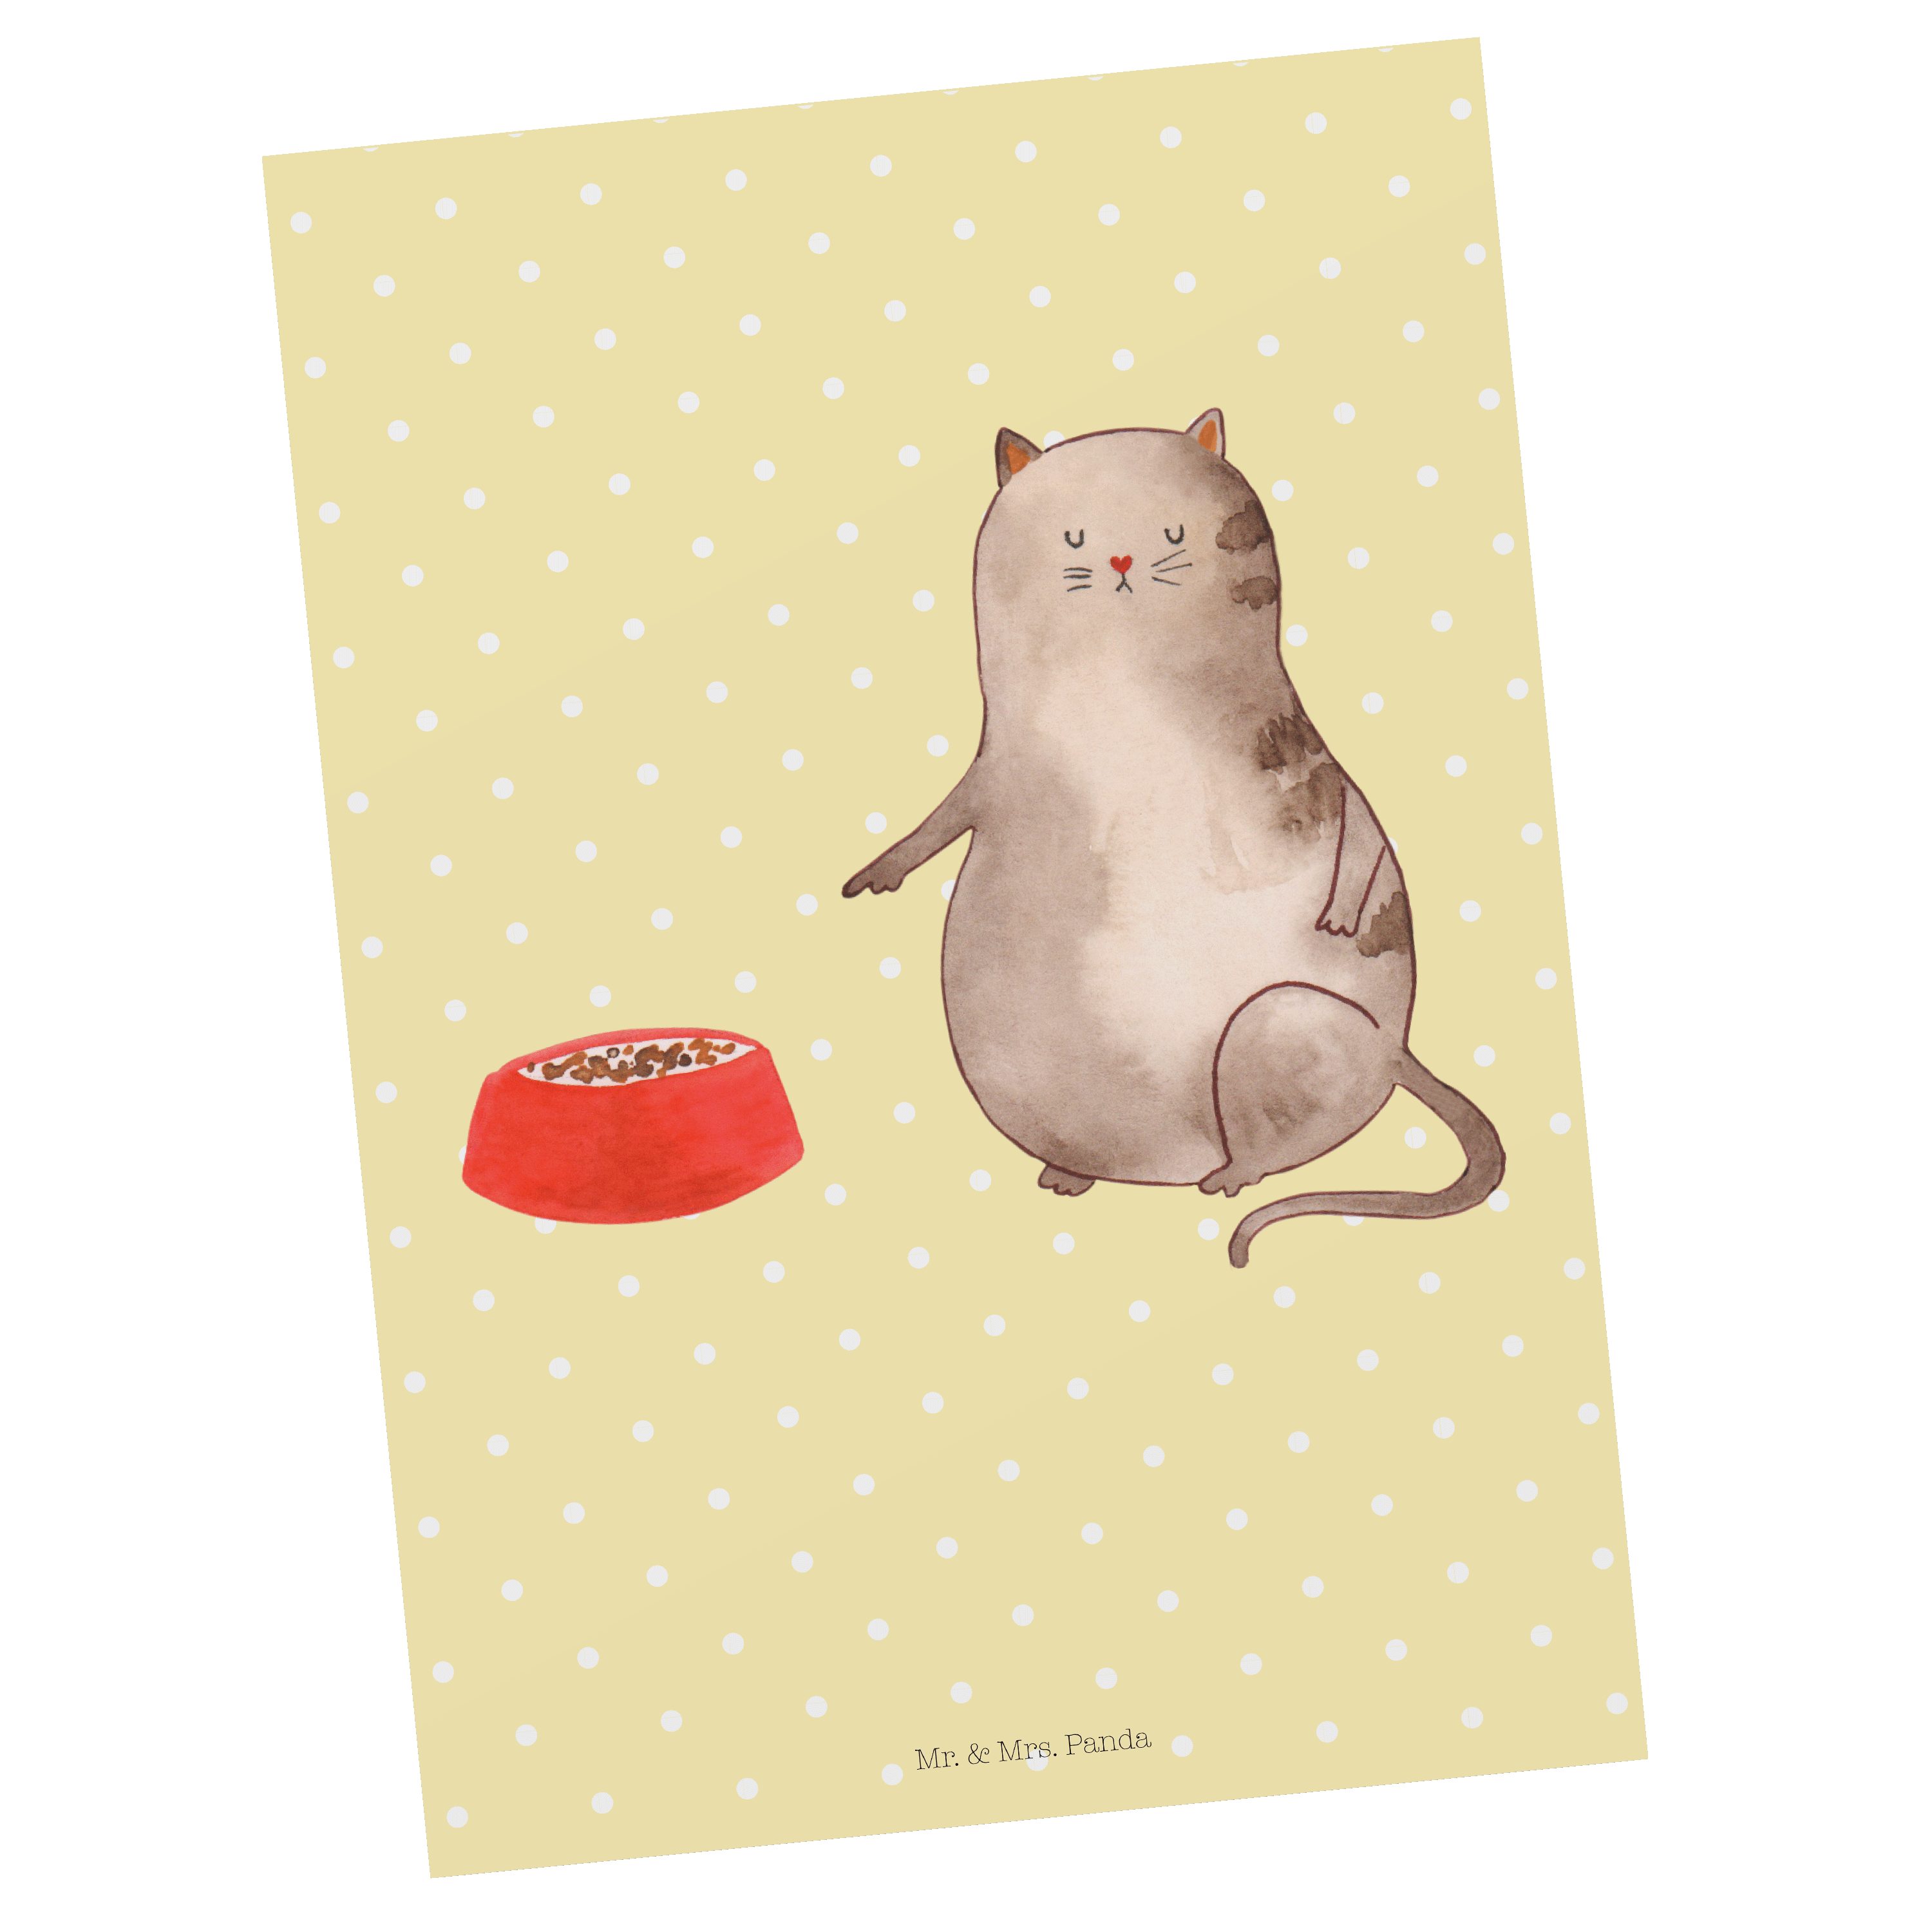 Mr. & Mrs. Panda Postkarte Katze fressen - Gelb Pastell - Geschenk, Katzenaccessoires, Einladung